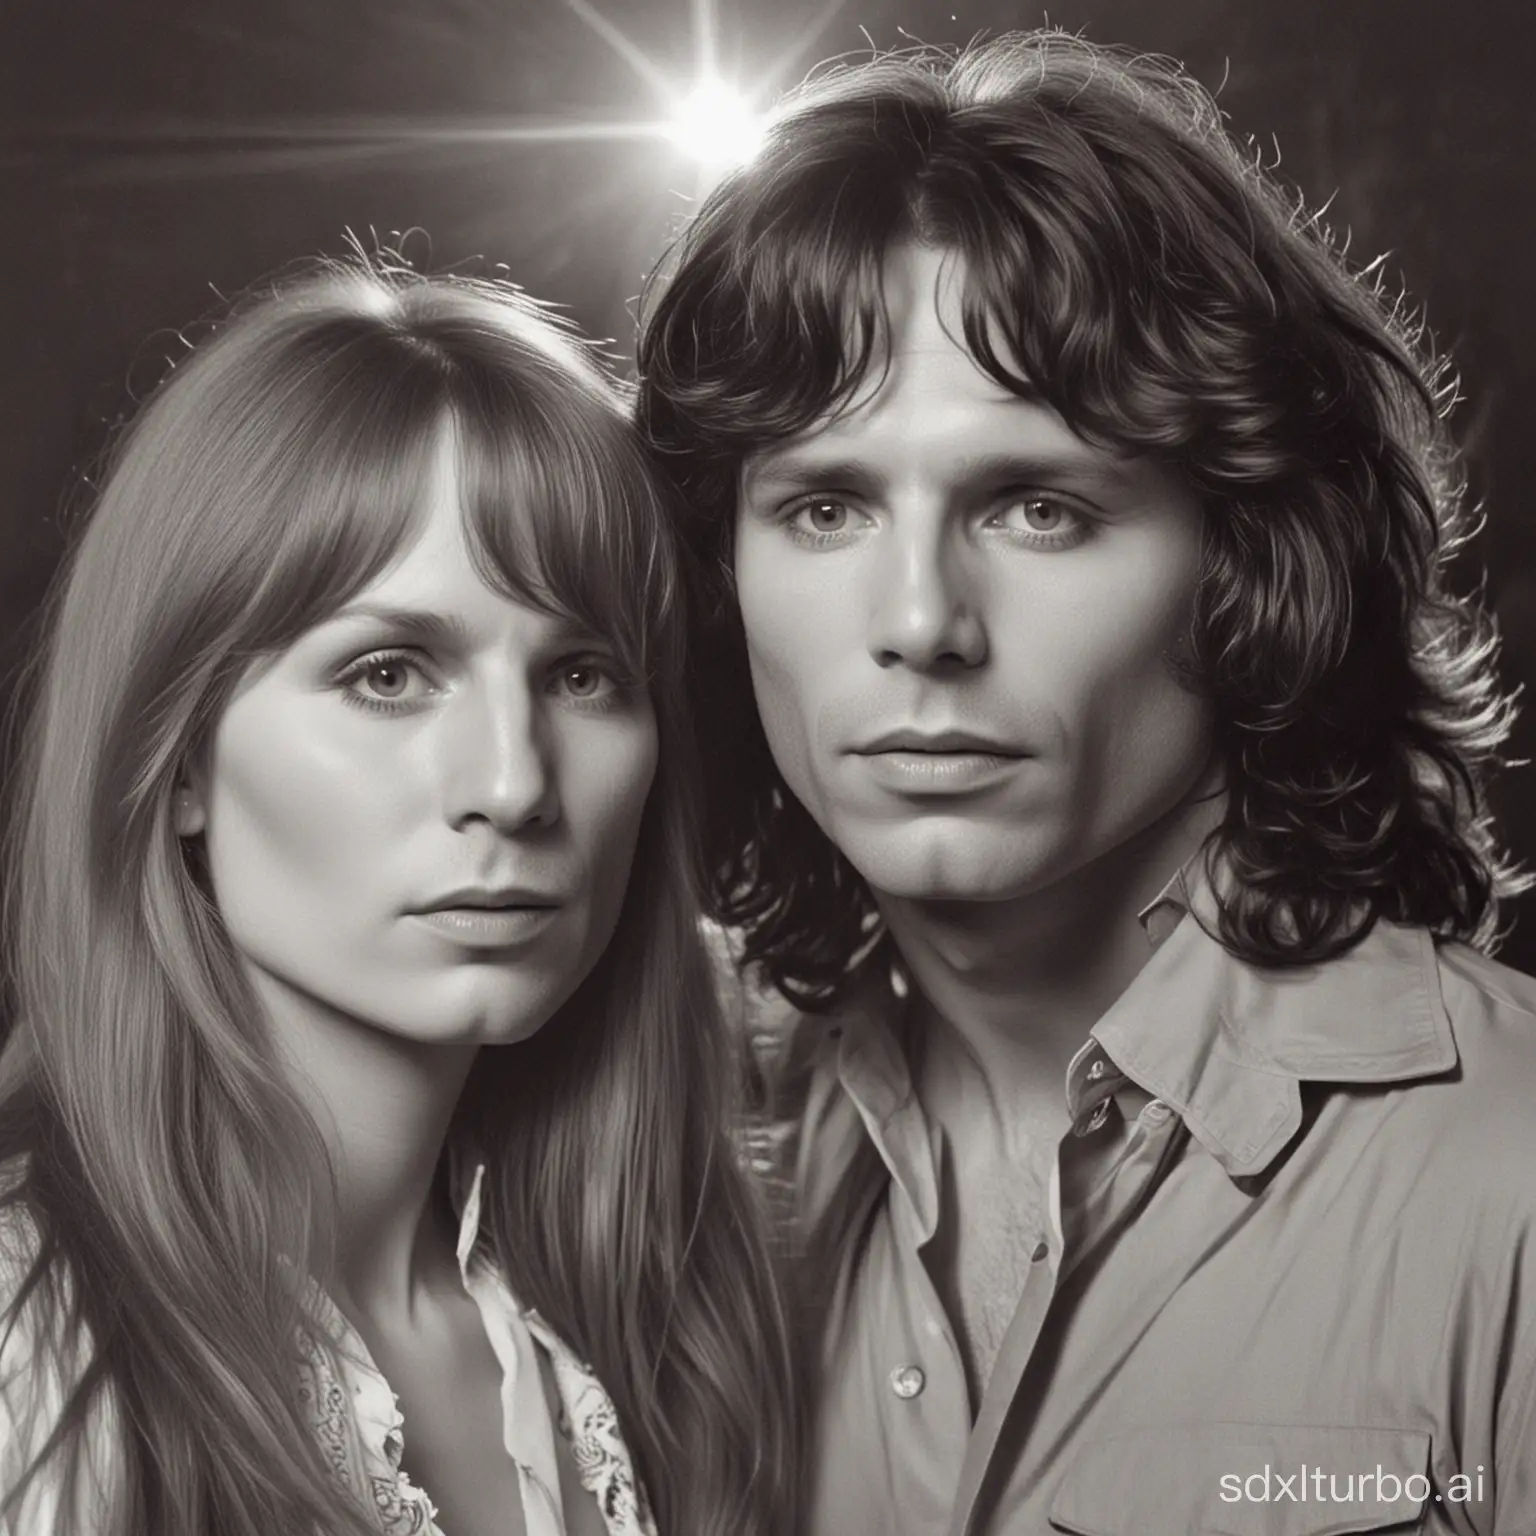 Jim Morrison and Pamela Courson lsd dmt

Astral plane